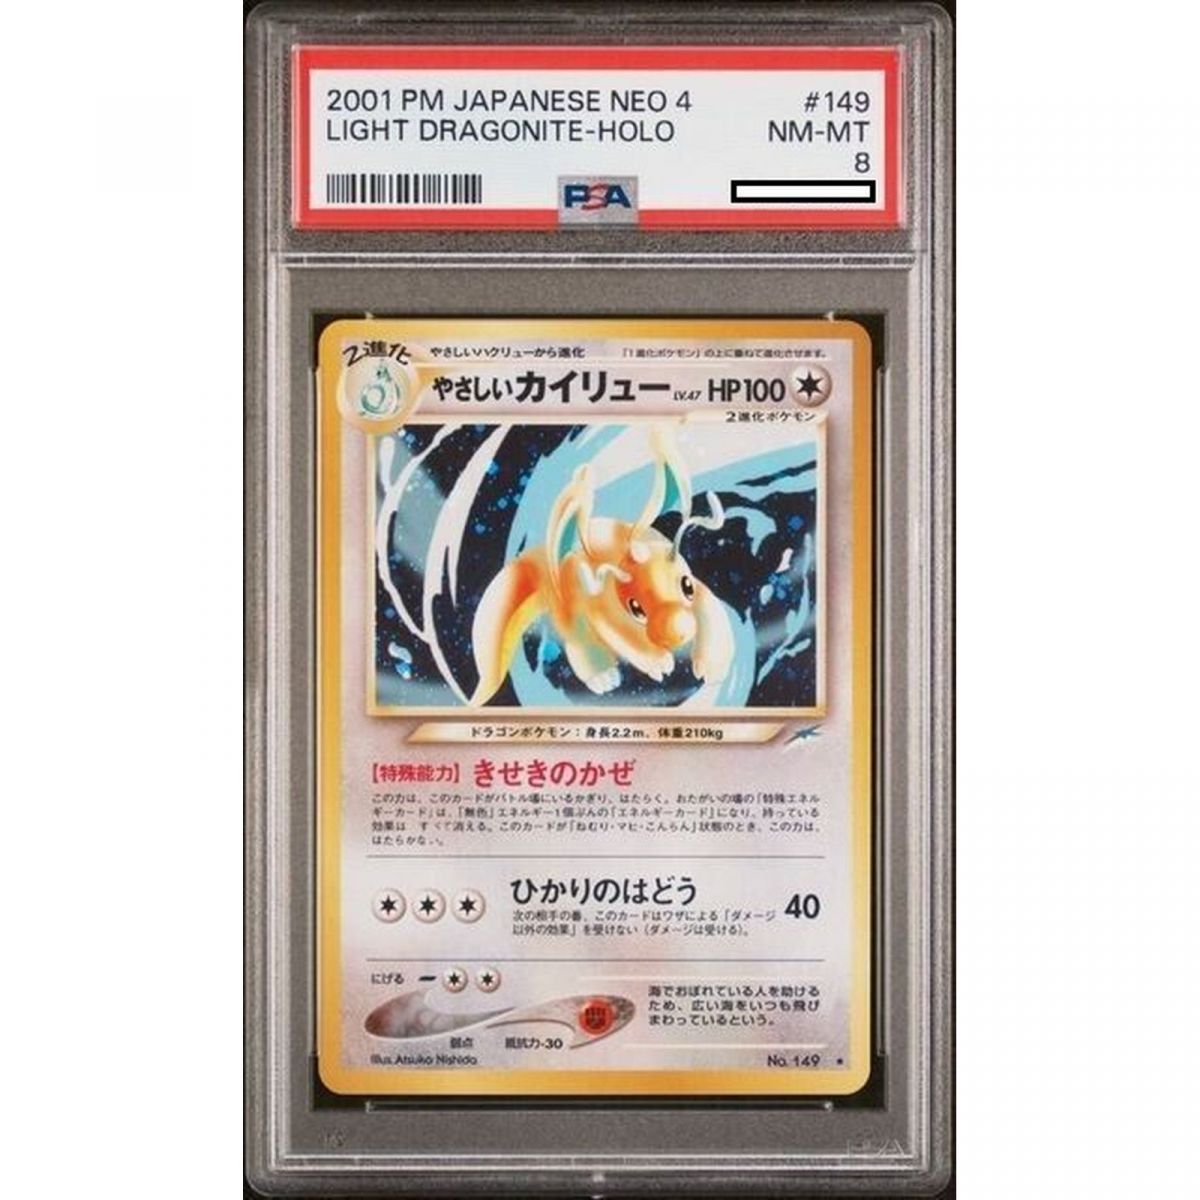 Pokémon - Graded Card - Light Dragonite Neo 4 Destiny Japanisch 2001 [PSA 8 - NM-MT]